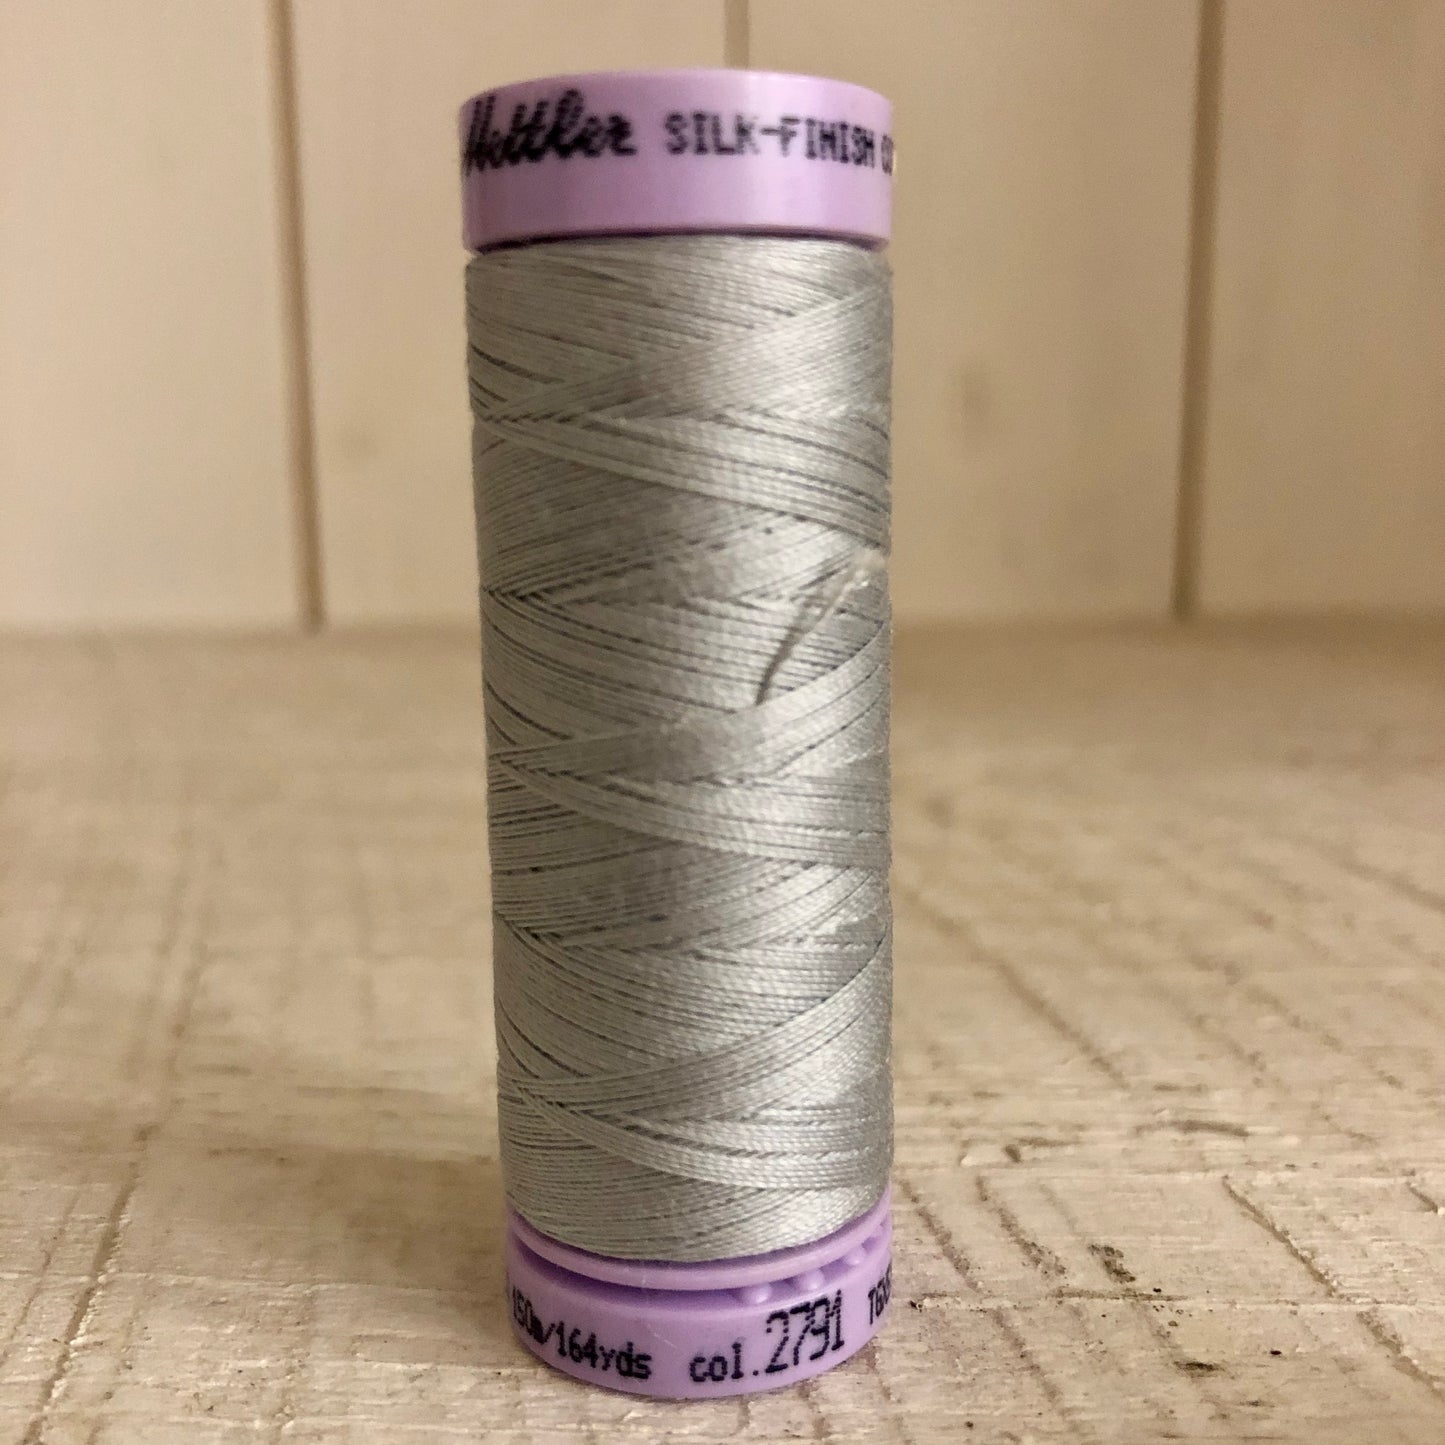 Mettler Silk Finish Cotton Thread, Ash 2791, 150 meter Spool